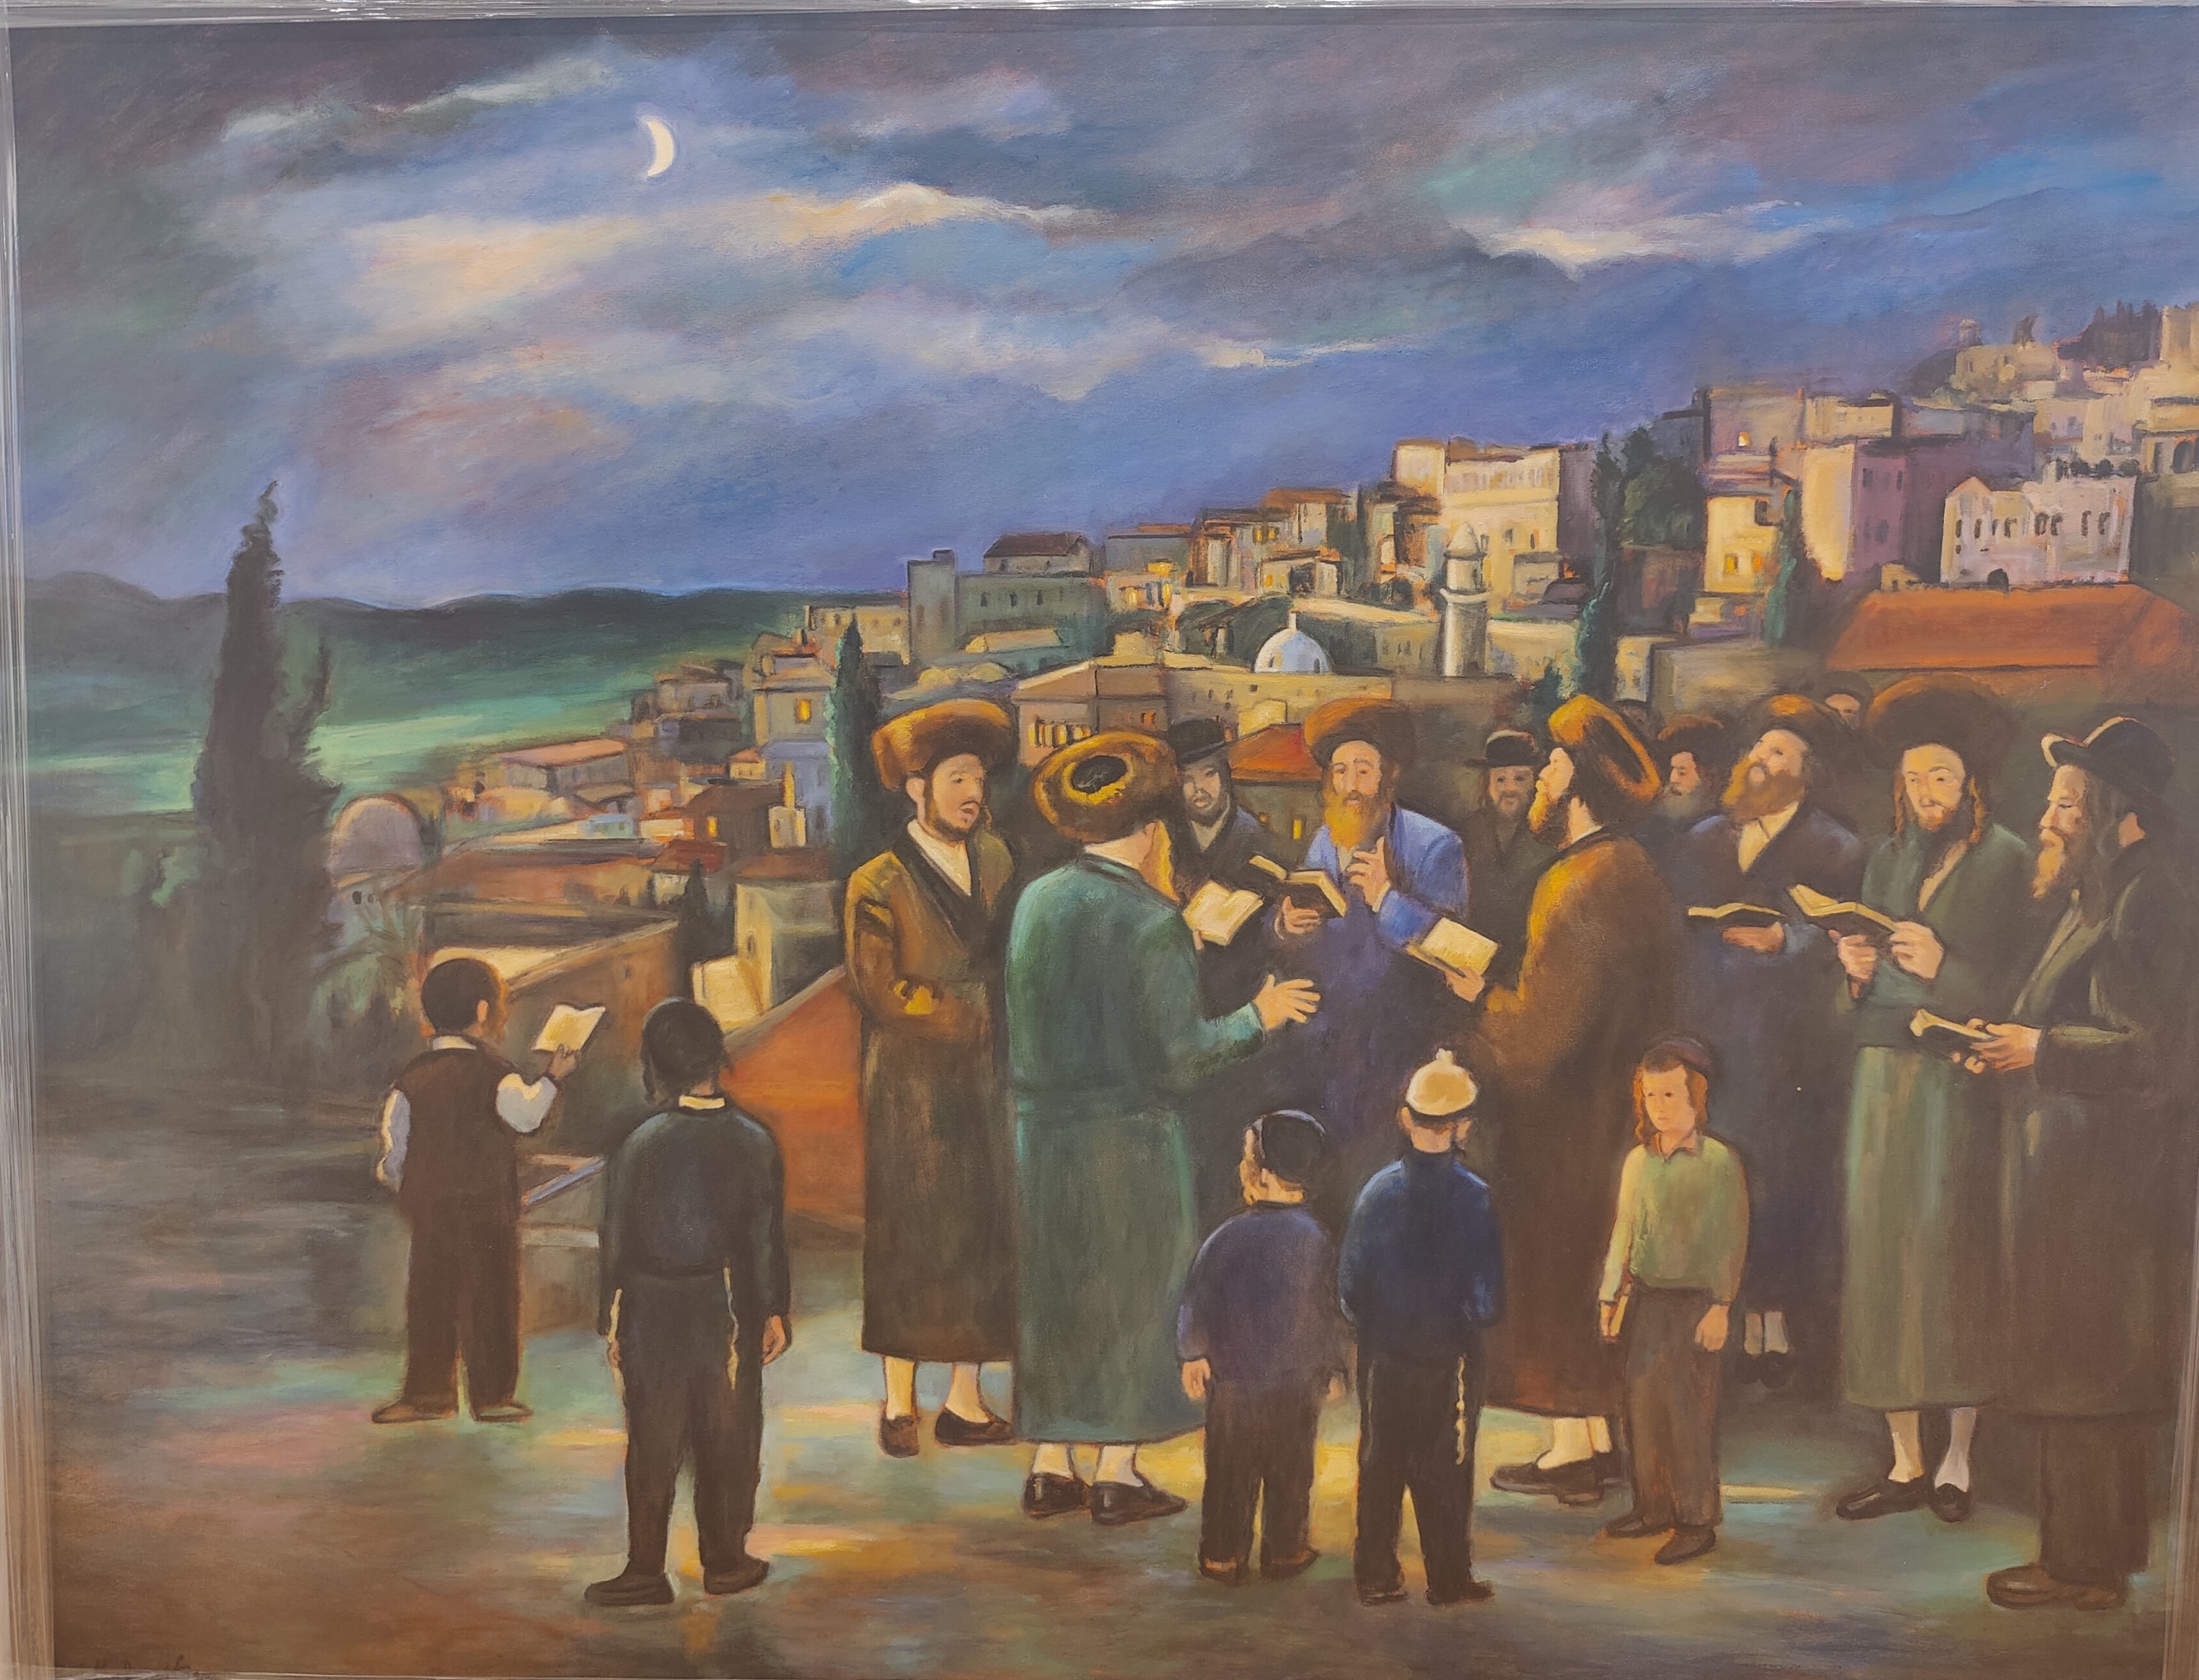 Zvi Malnovitzer - Kiddush Levana in Safed - Oil on Canvas - 138 x 184 cm